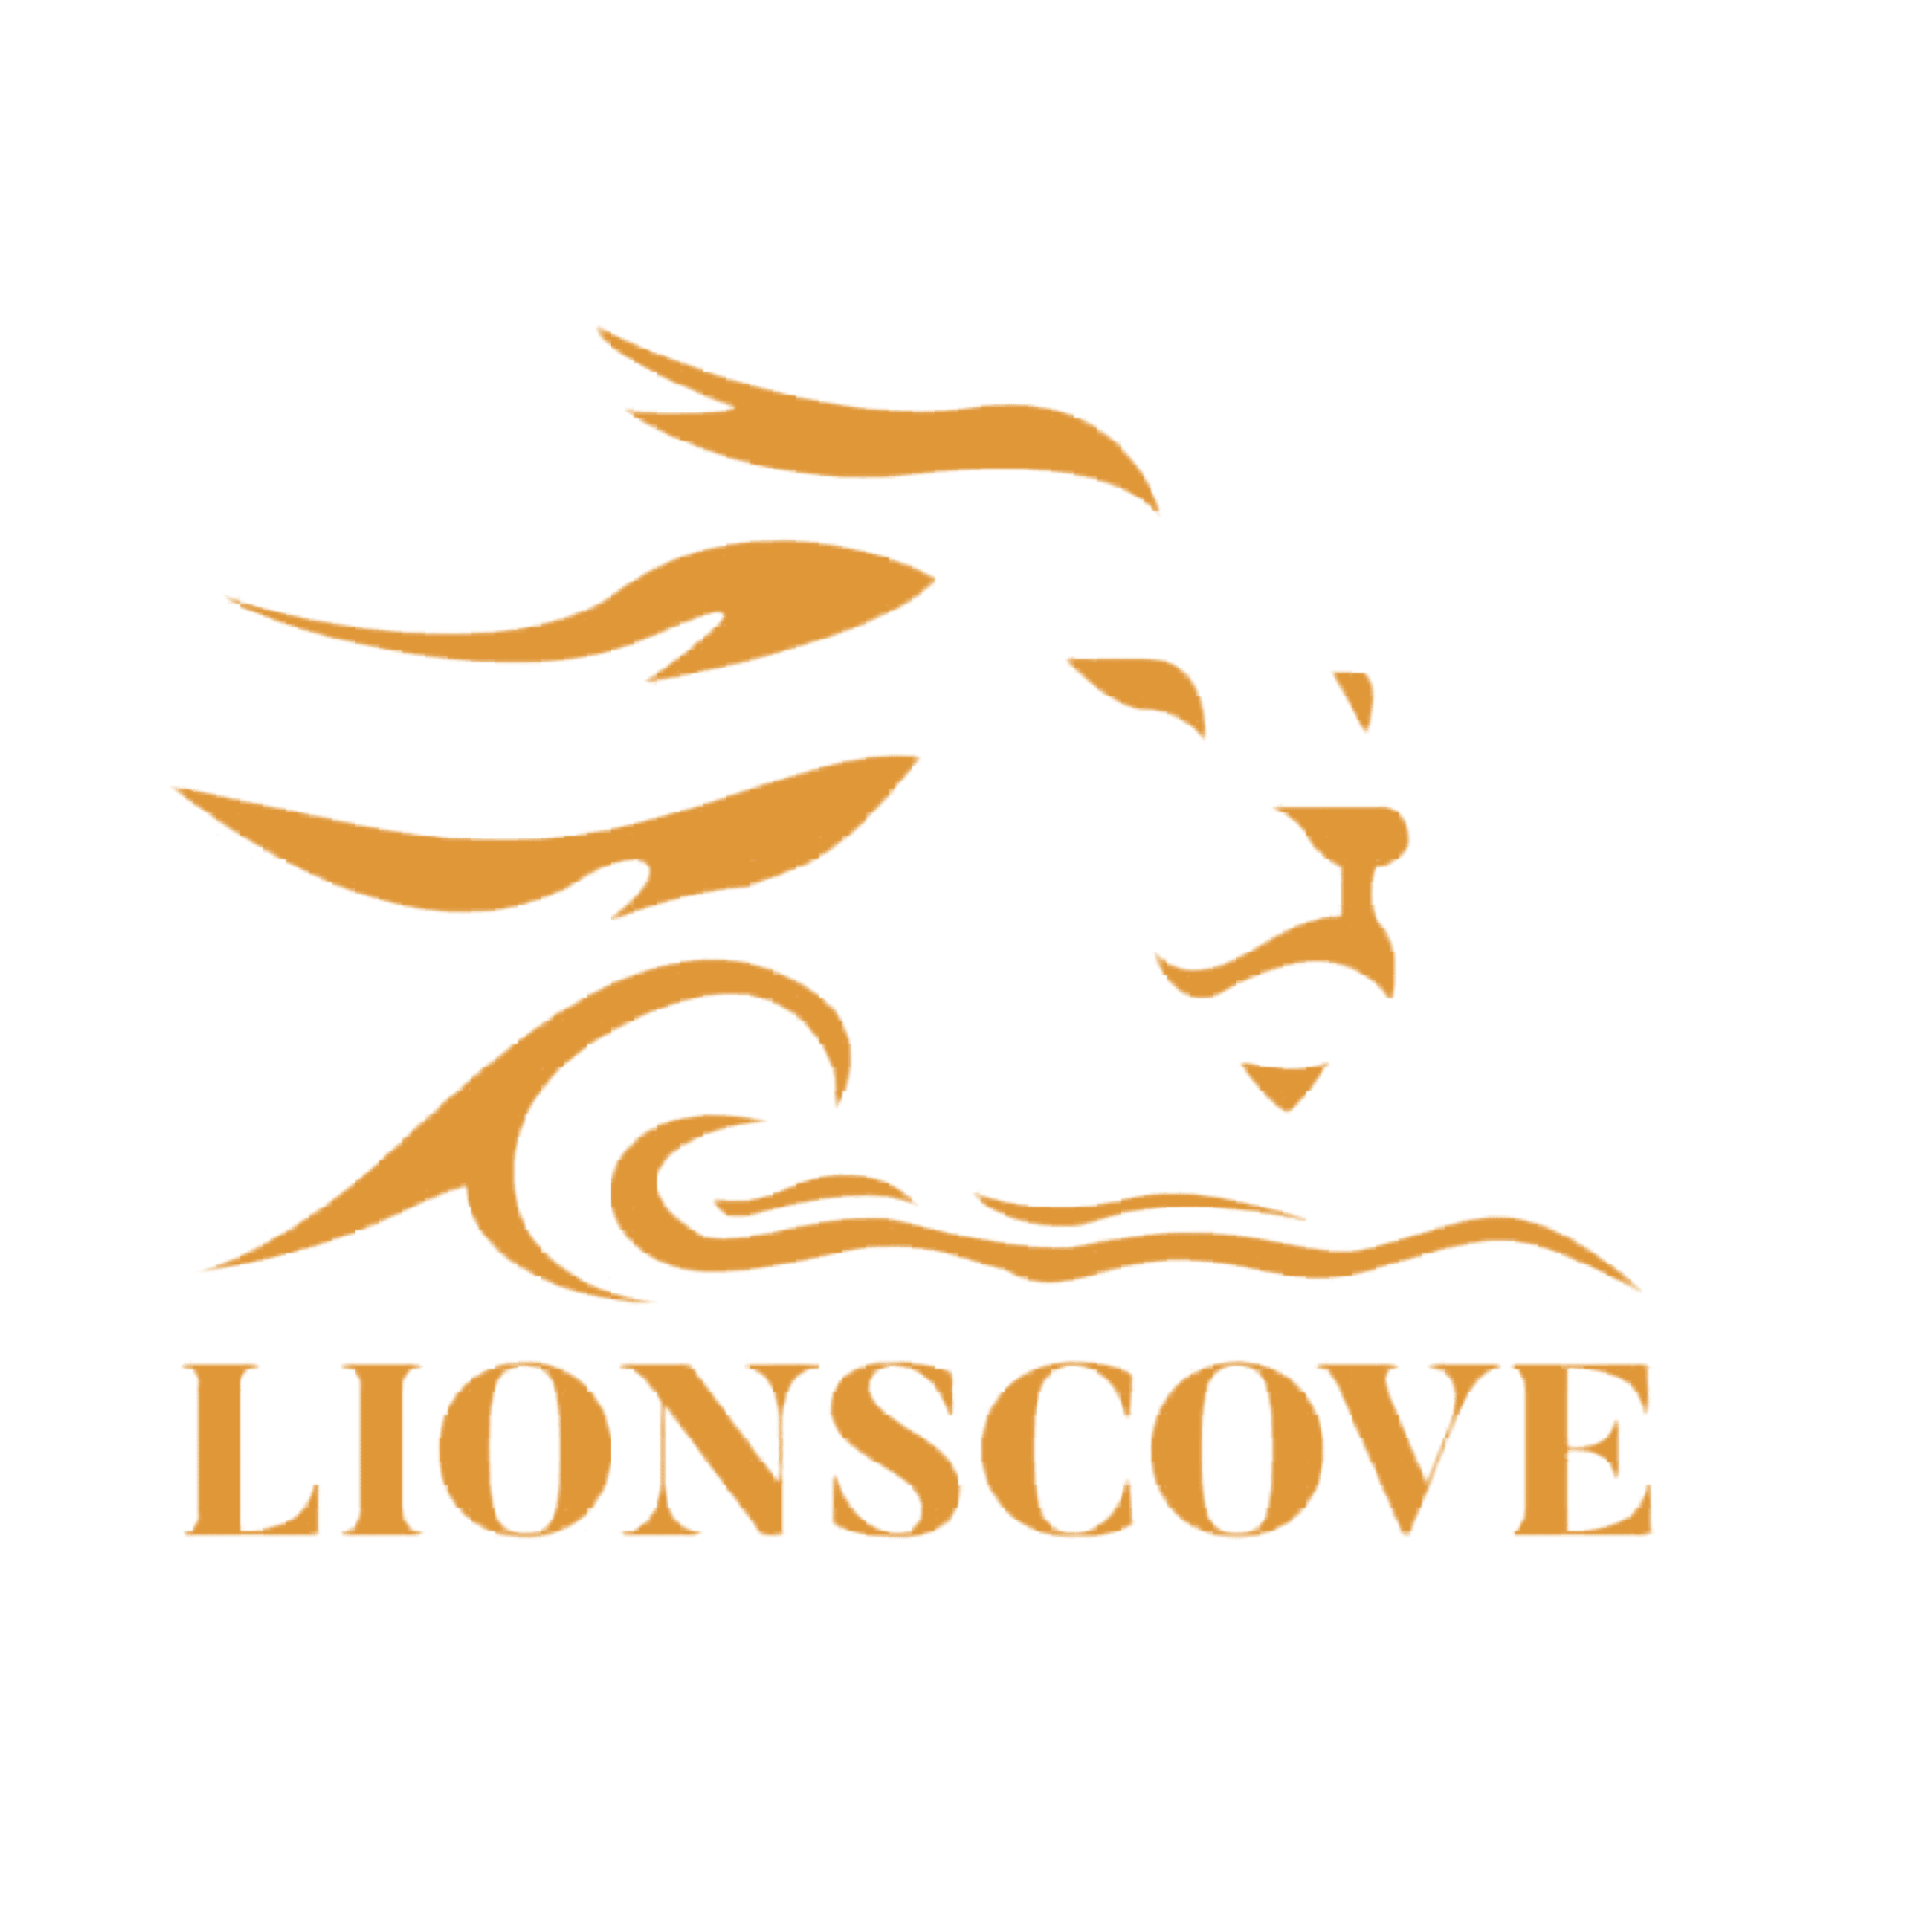 LIONSCOVE logo